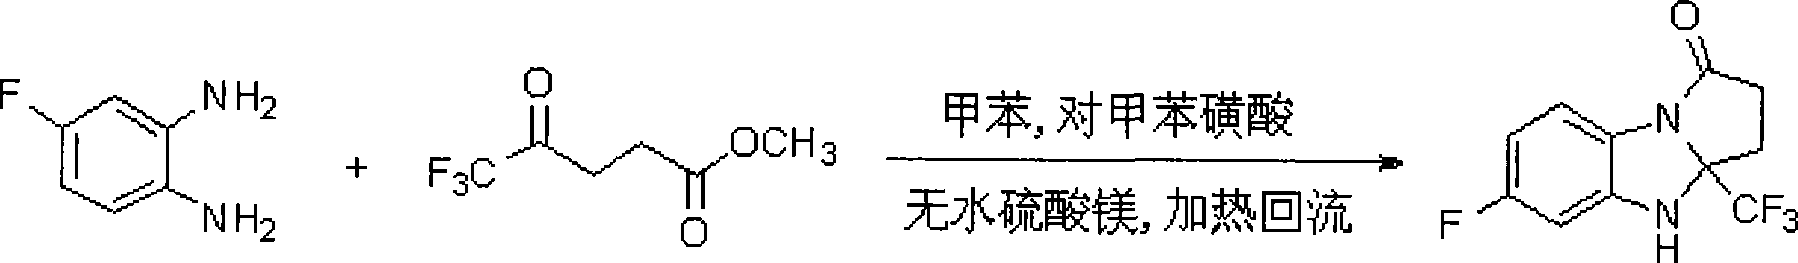 6-flourine-3a-(trifluoromethyl)-2,3,3a,4-tetrahydro-1h-benzo[d]pyrrole[1,2-a]imidazole-1-ketone and method for synthesizing same